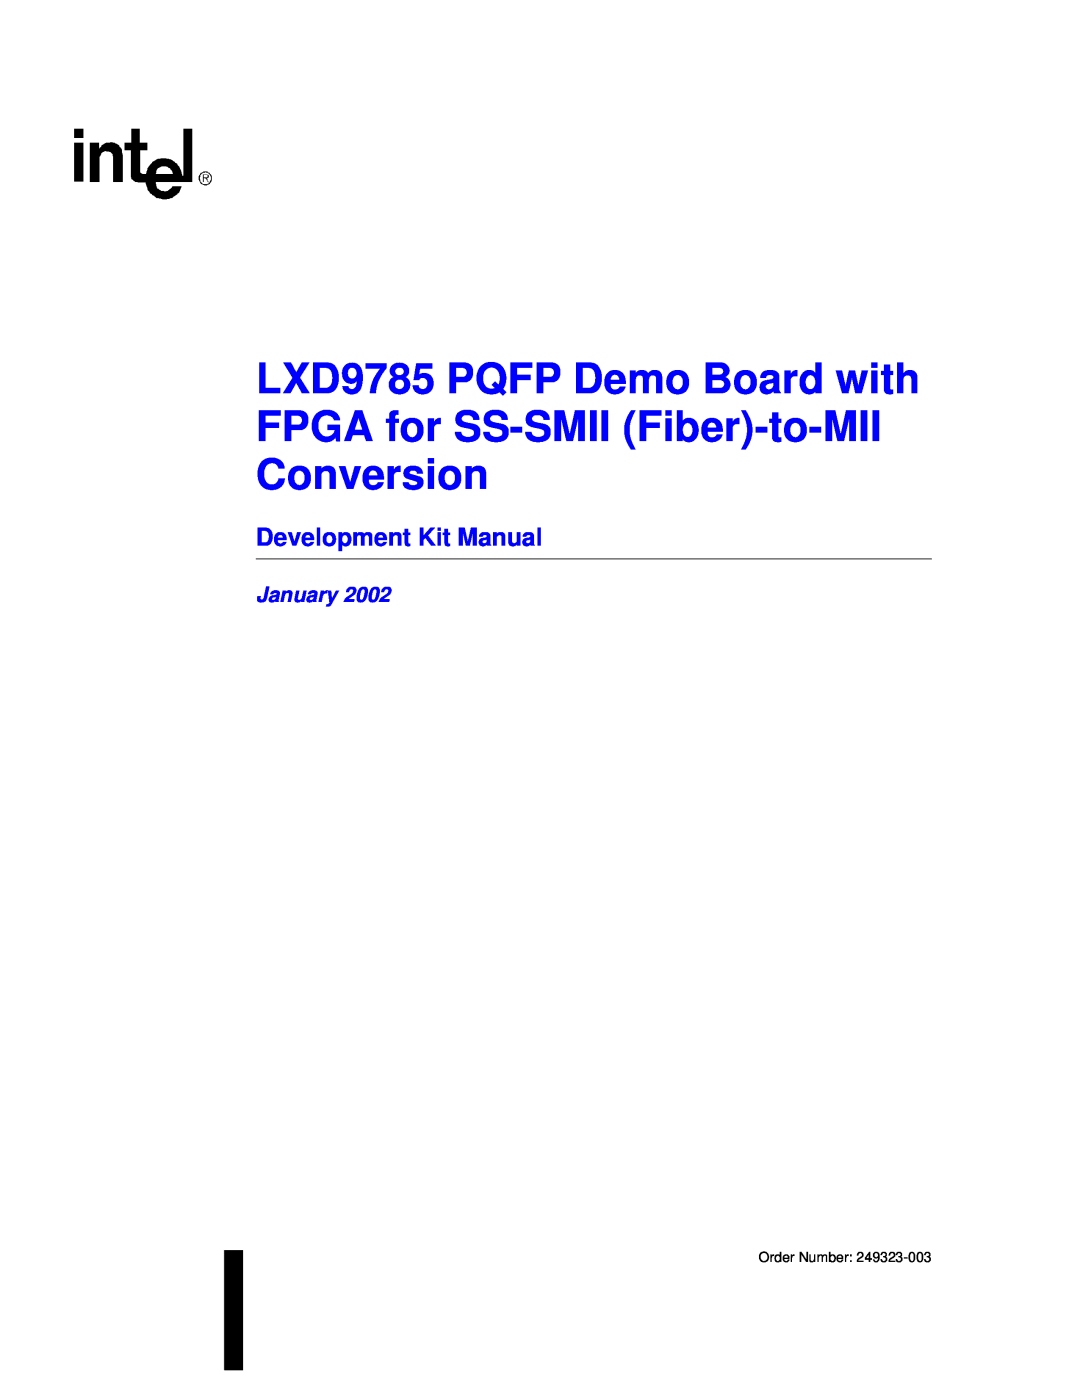 Intel Demo Board with FPGA for SS-SMII (Fiber)-to-MII Conversion, 249323-003 manual Development Kit Manual, January 